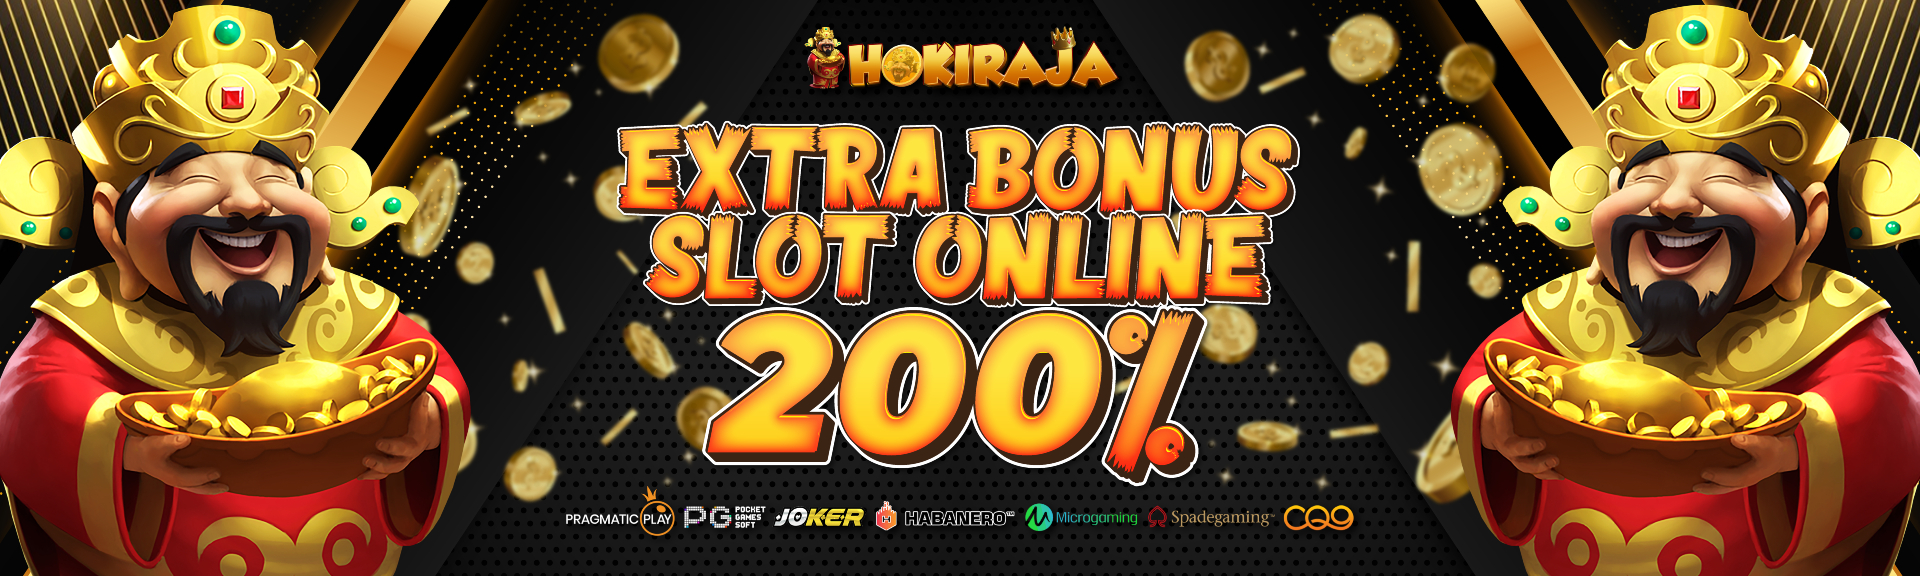 extra bonus slot online 200%